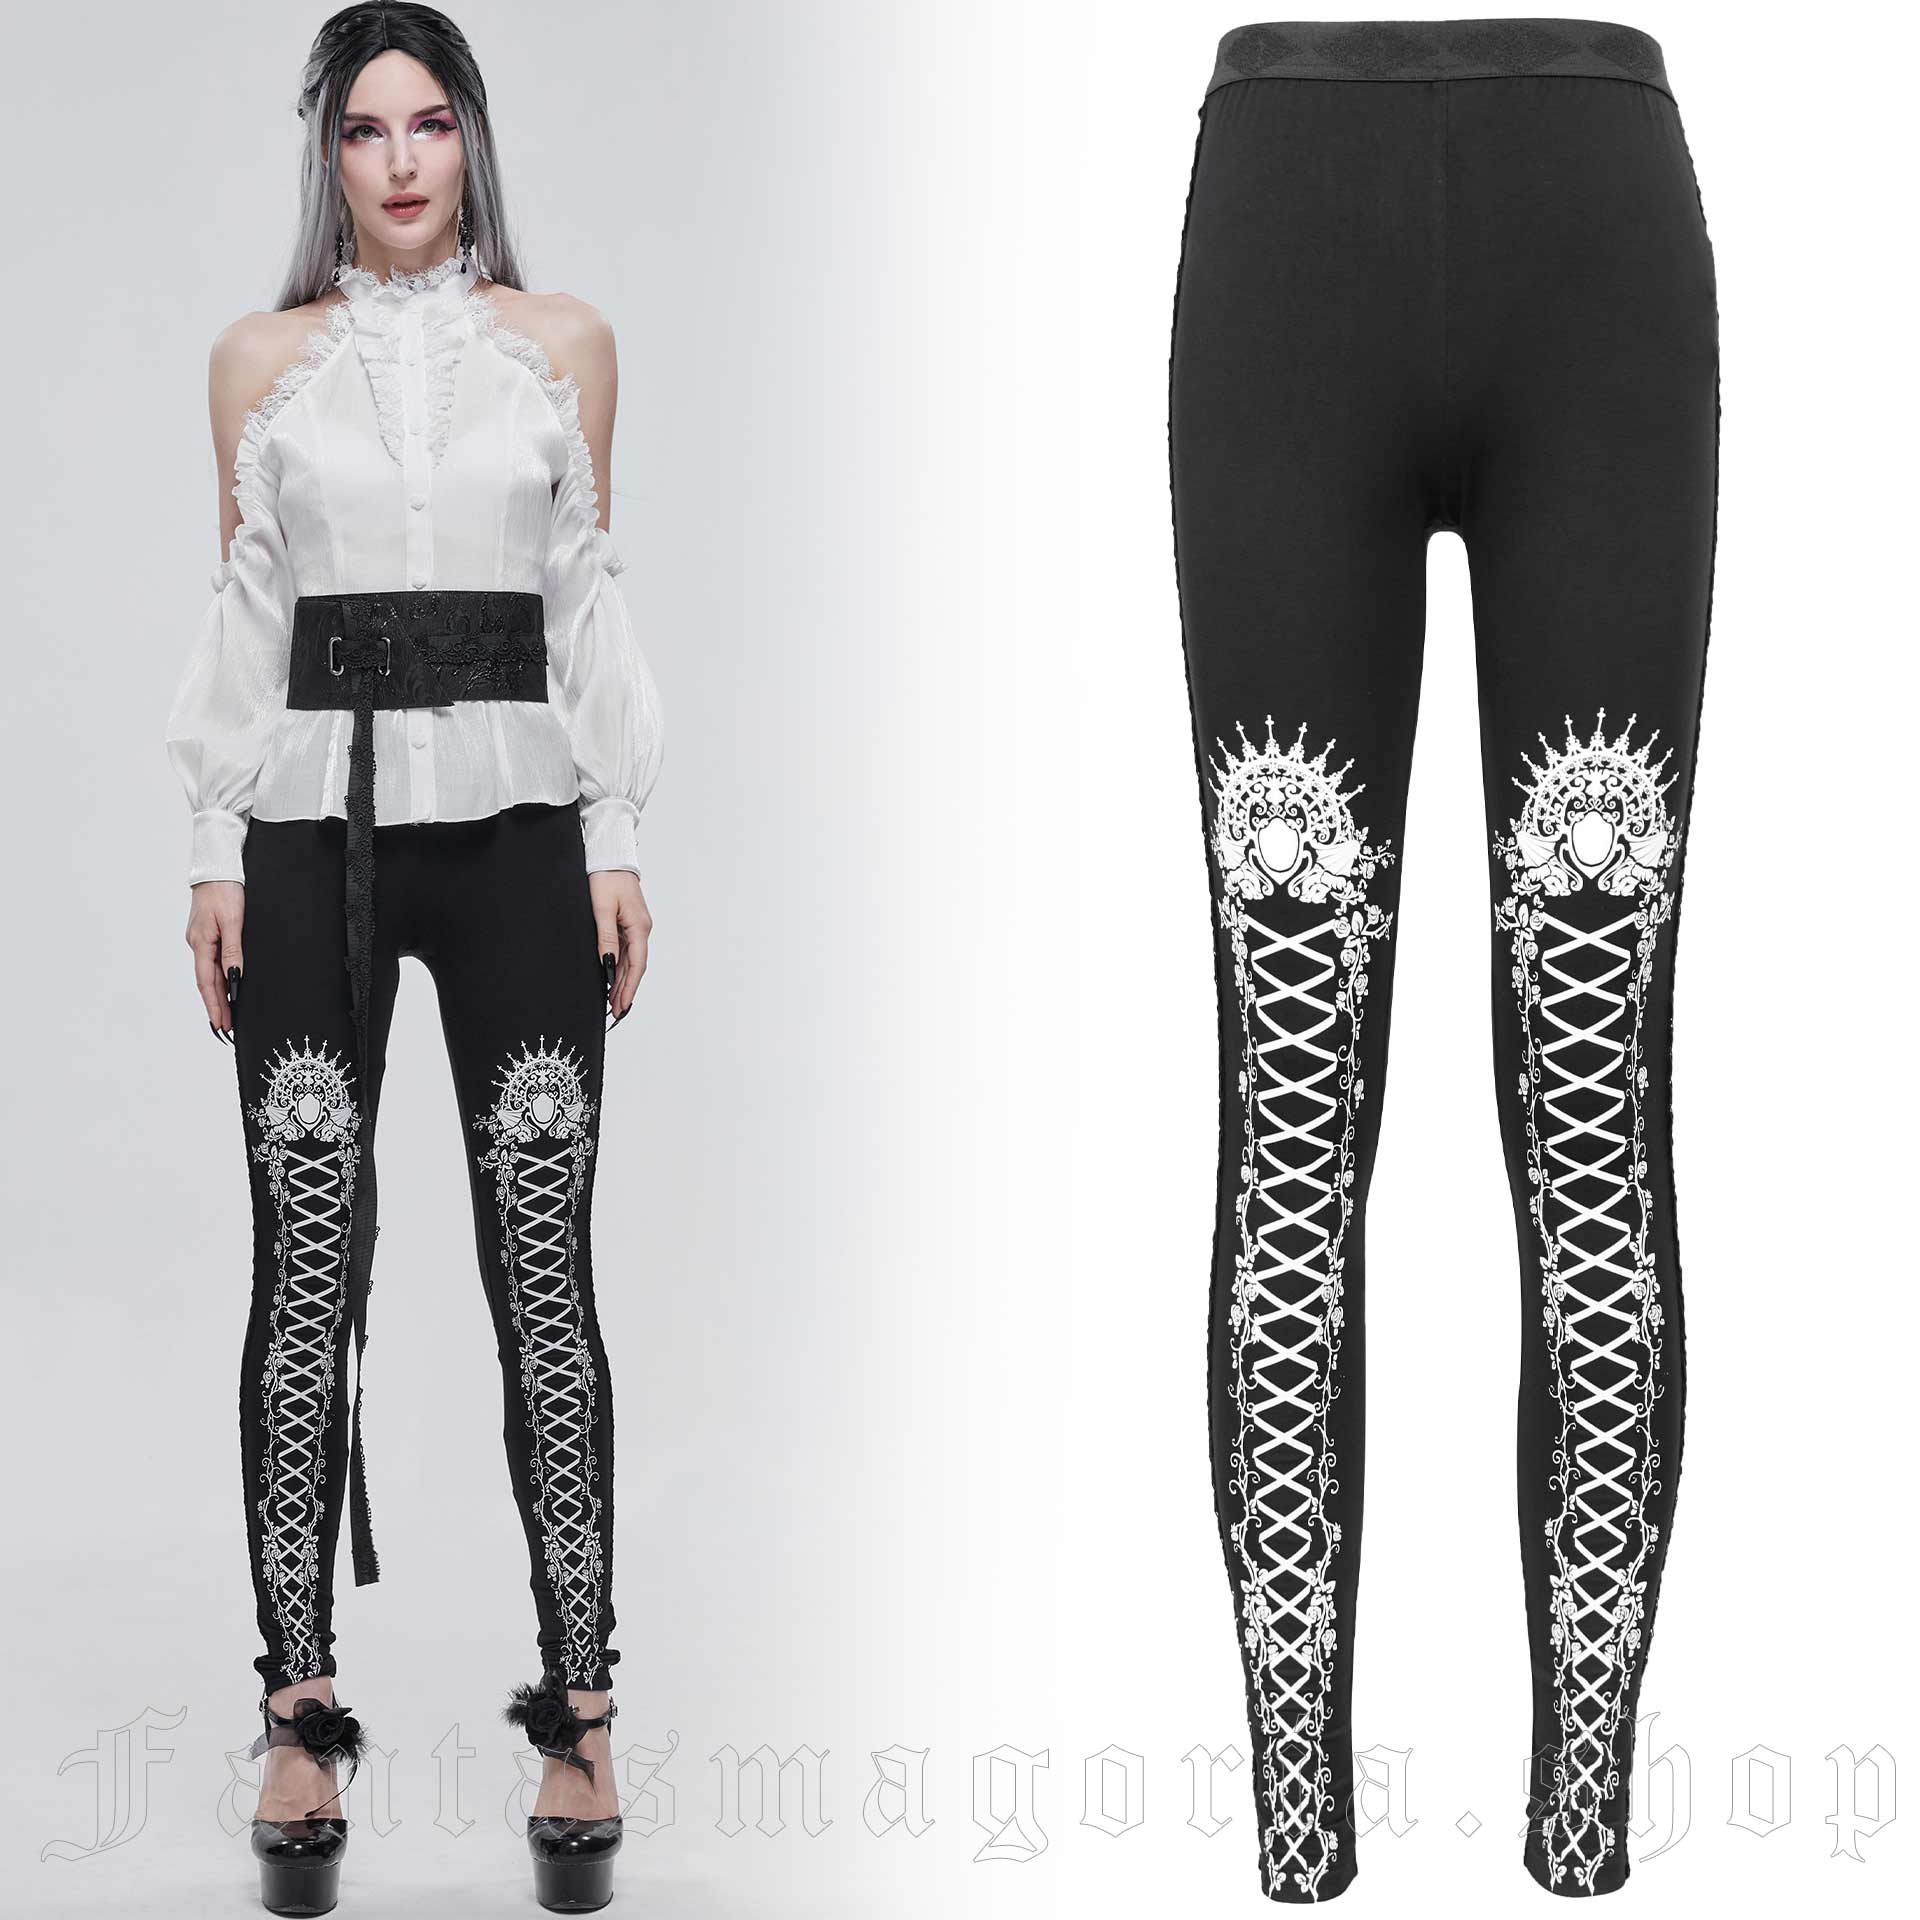 Gothic Lolita Leggings PT14701BK/WH by Devil Fashion brand